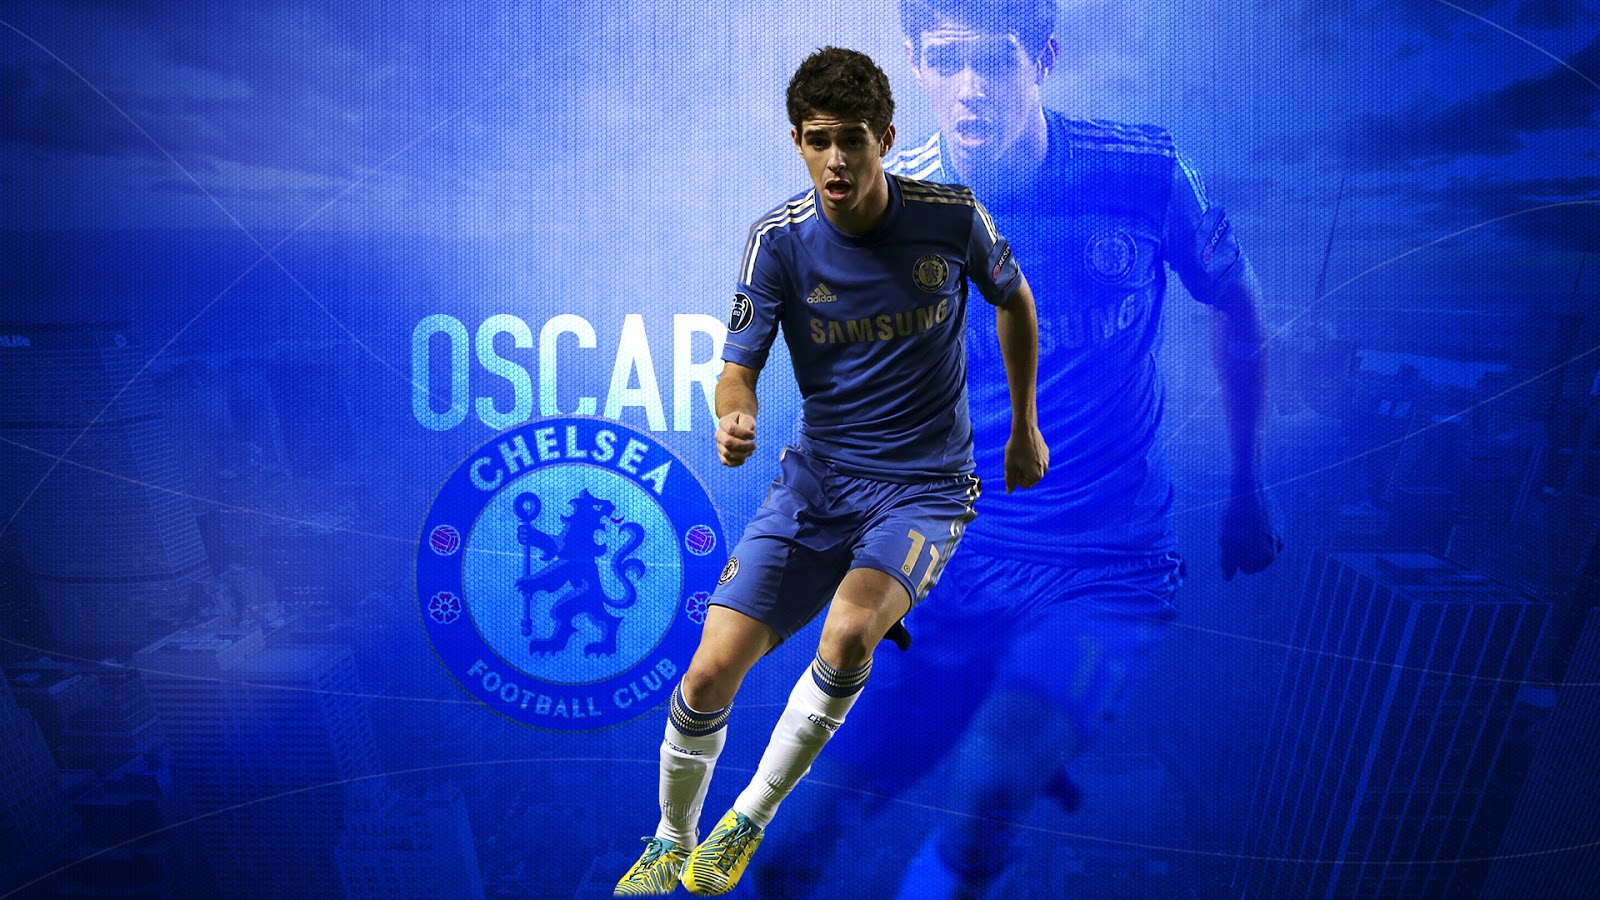 Football Wallpapers Oscar   Chelsea wallpaper